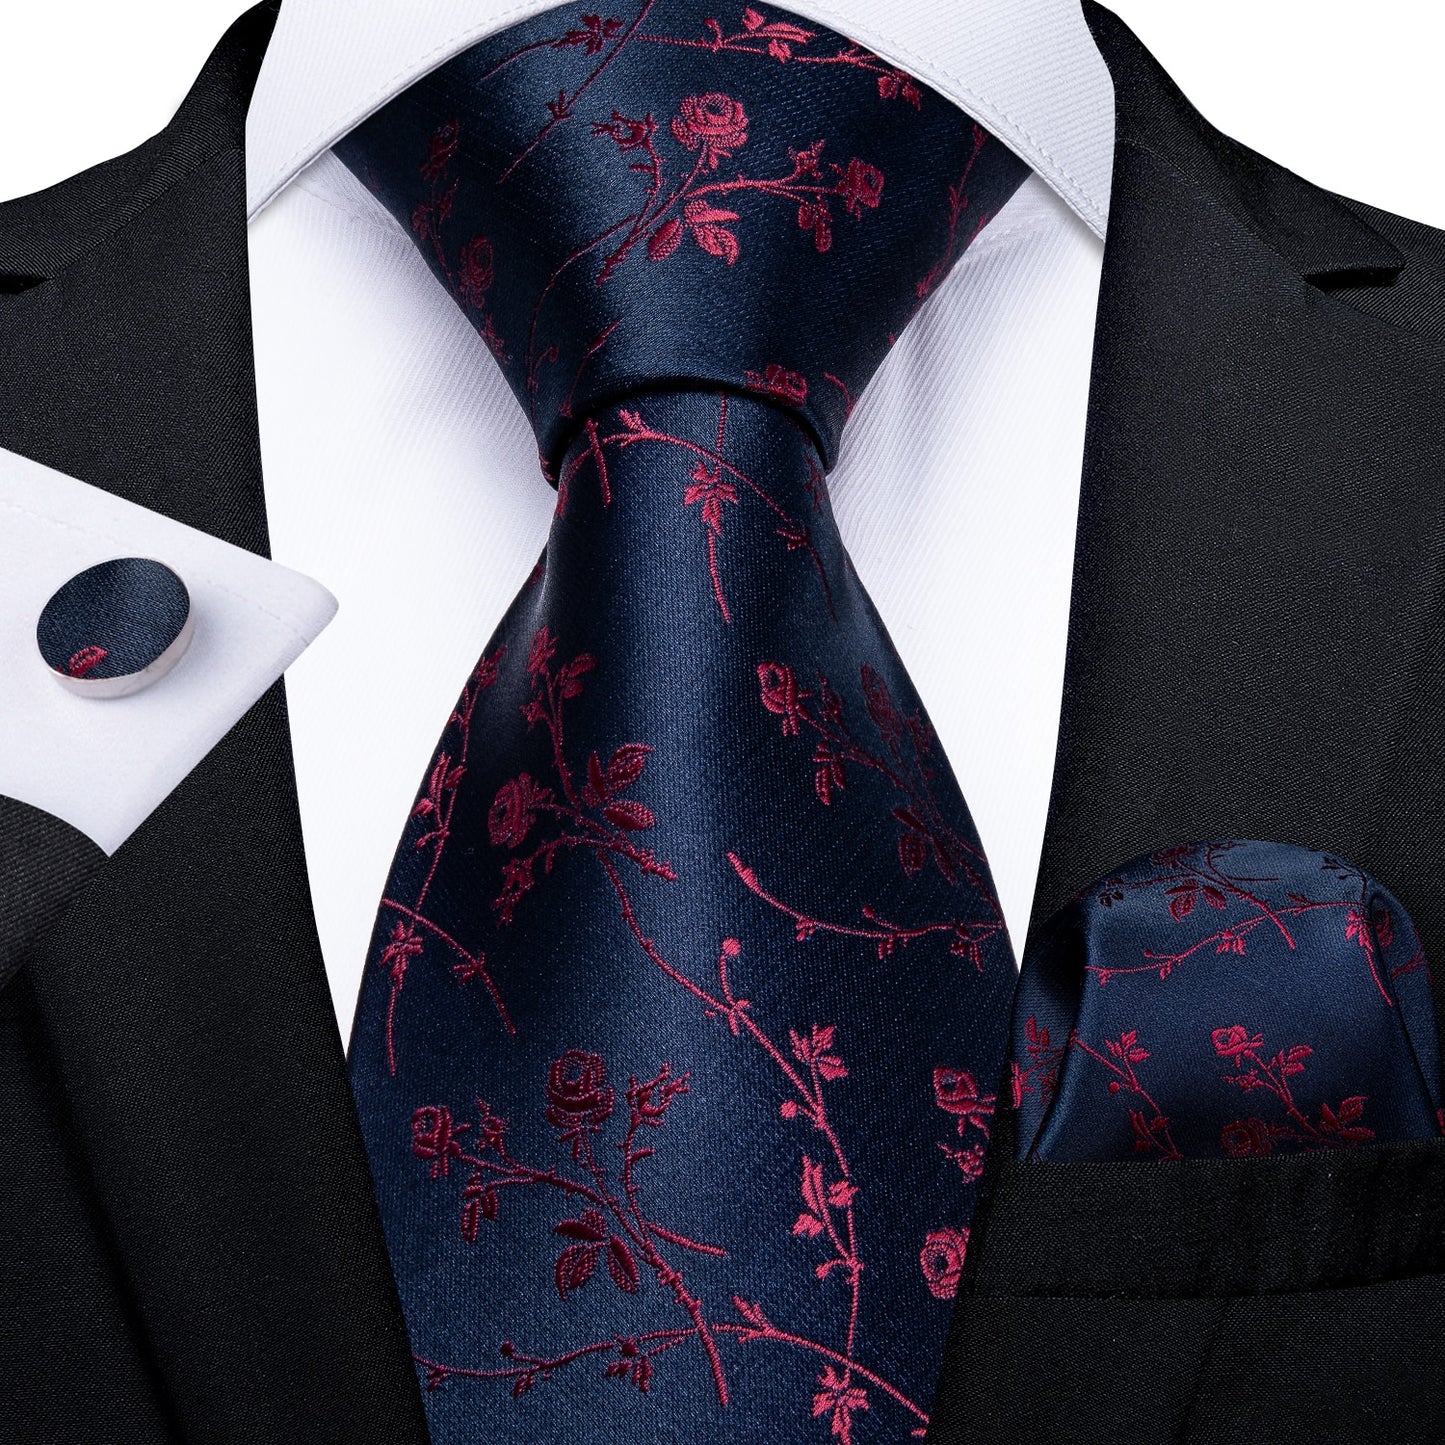 3 Piece Classic 100% Silk Men's Ties 8cm Blue Plaid Dot Striped Business Necktie Handkerchief Wedding Party Tie Set The Clothing Company Sydney